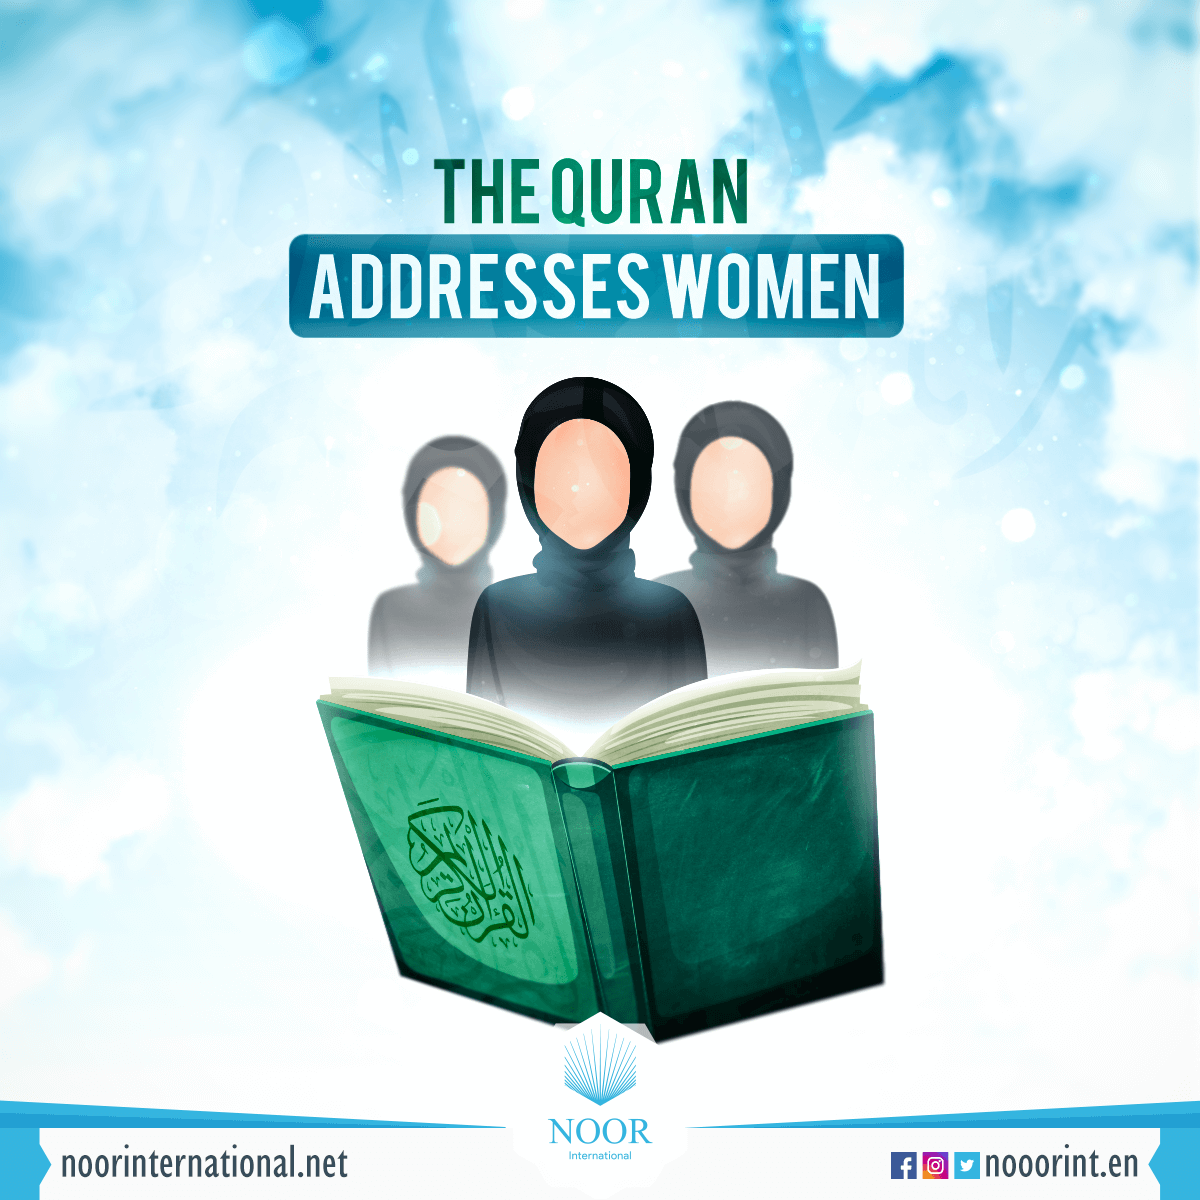 The Quran addresses women